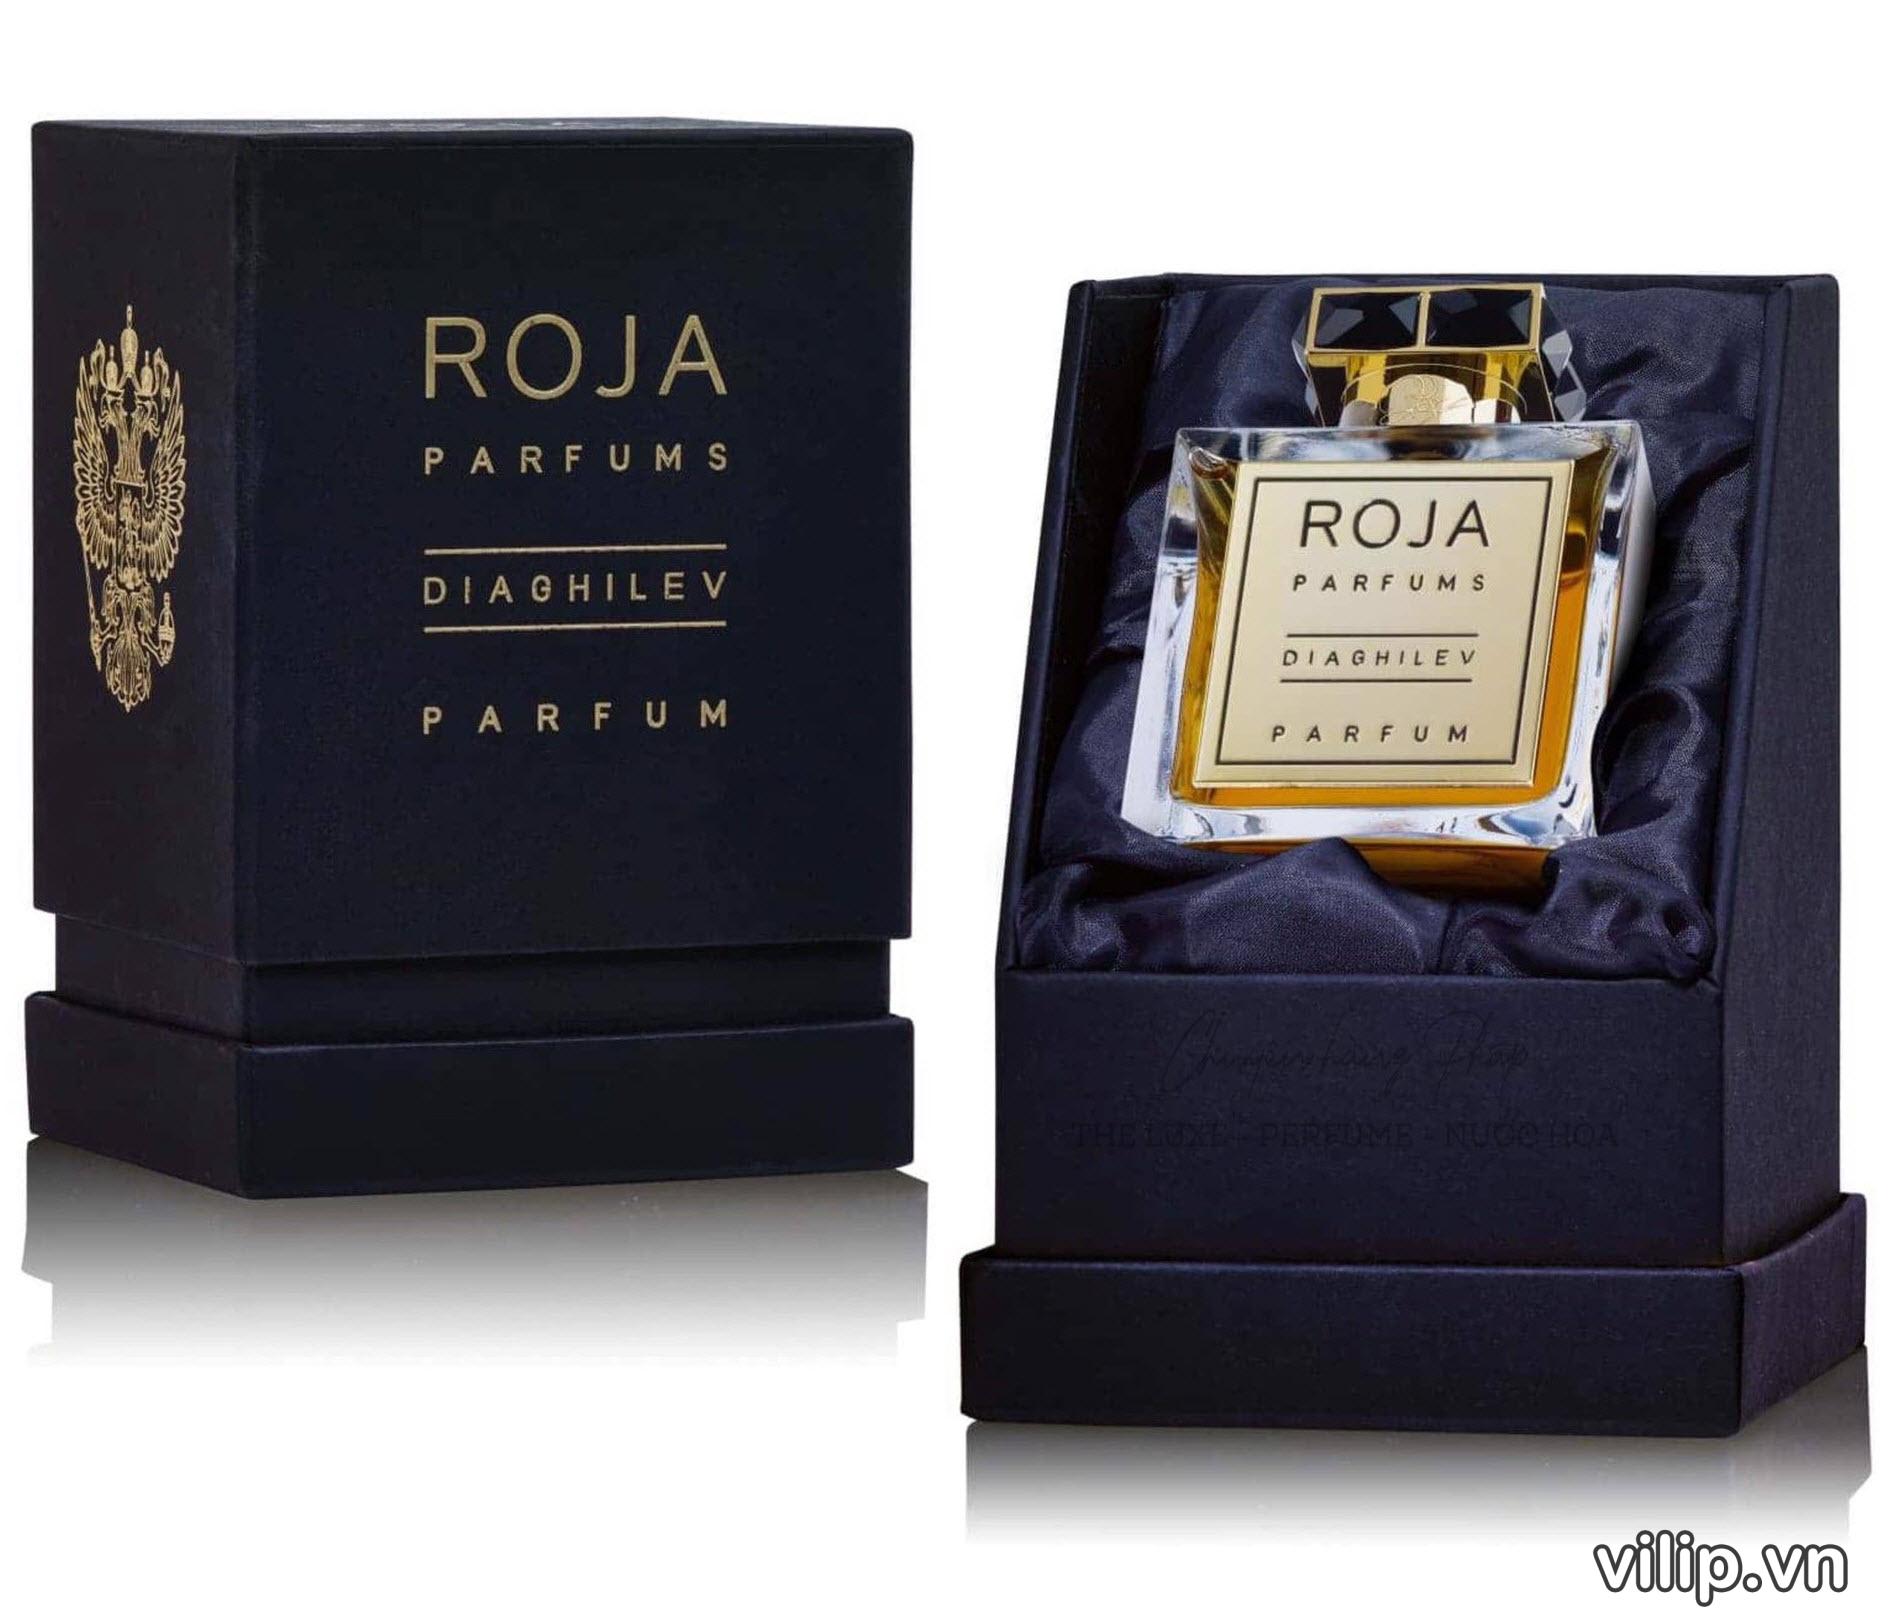 Nuóc Hoa Unisex Roja Parfums Diaghilev Parfum 1